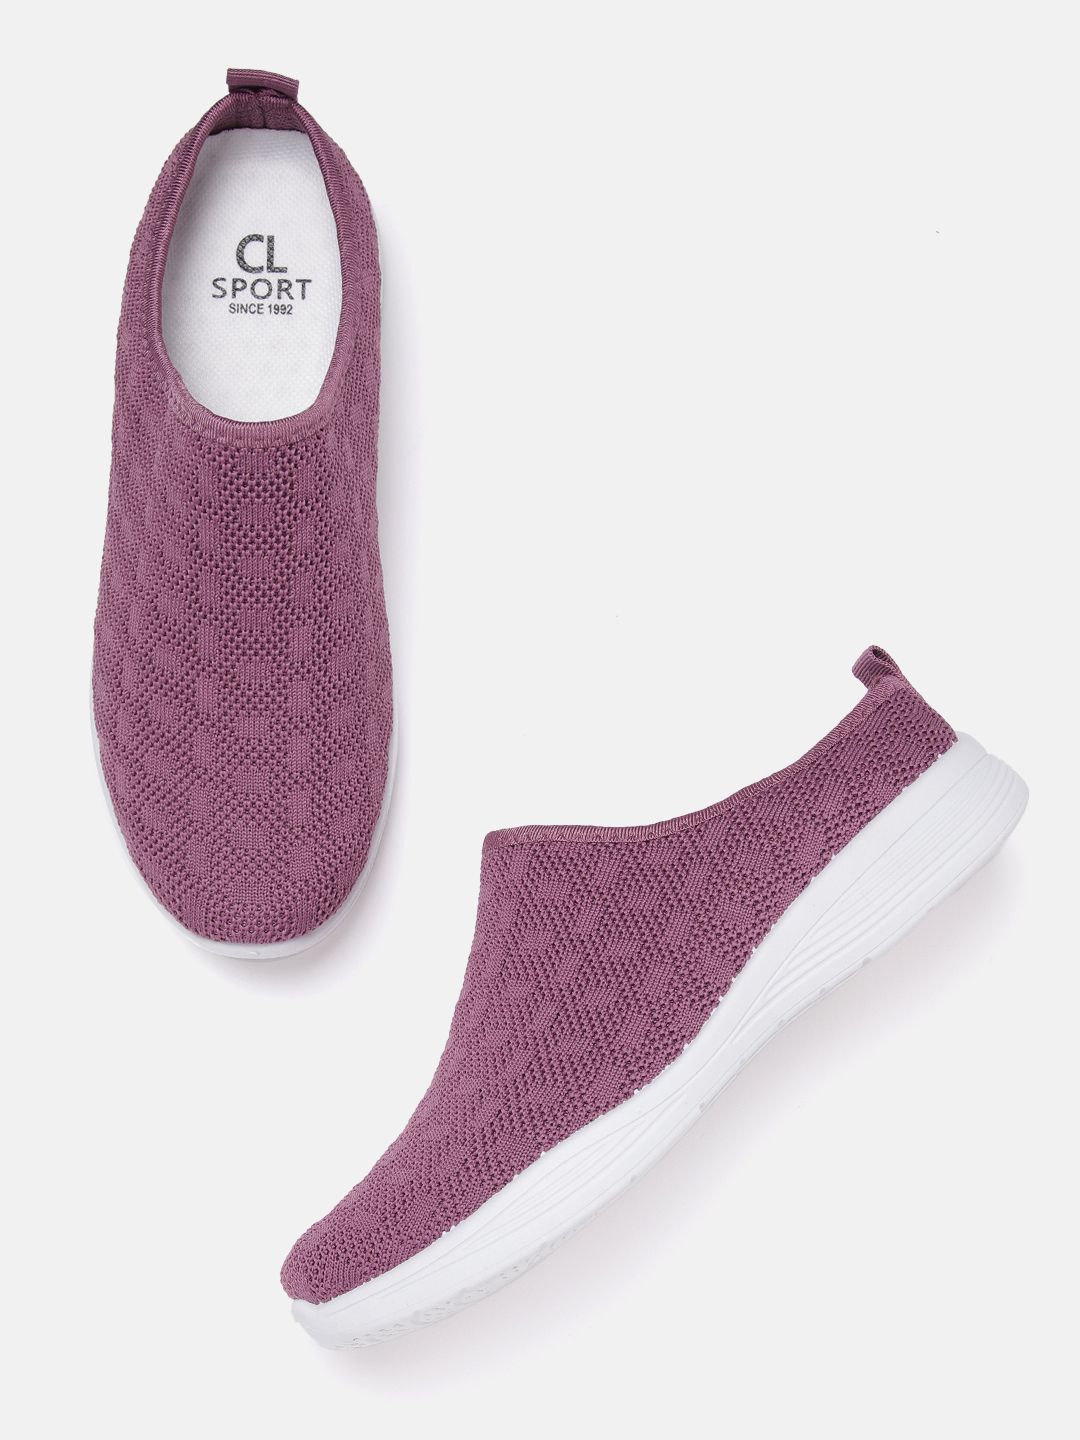 Carlton London sports Women Purple Woven Design Slip-On Sneakers Price in India